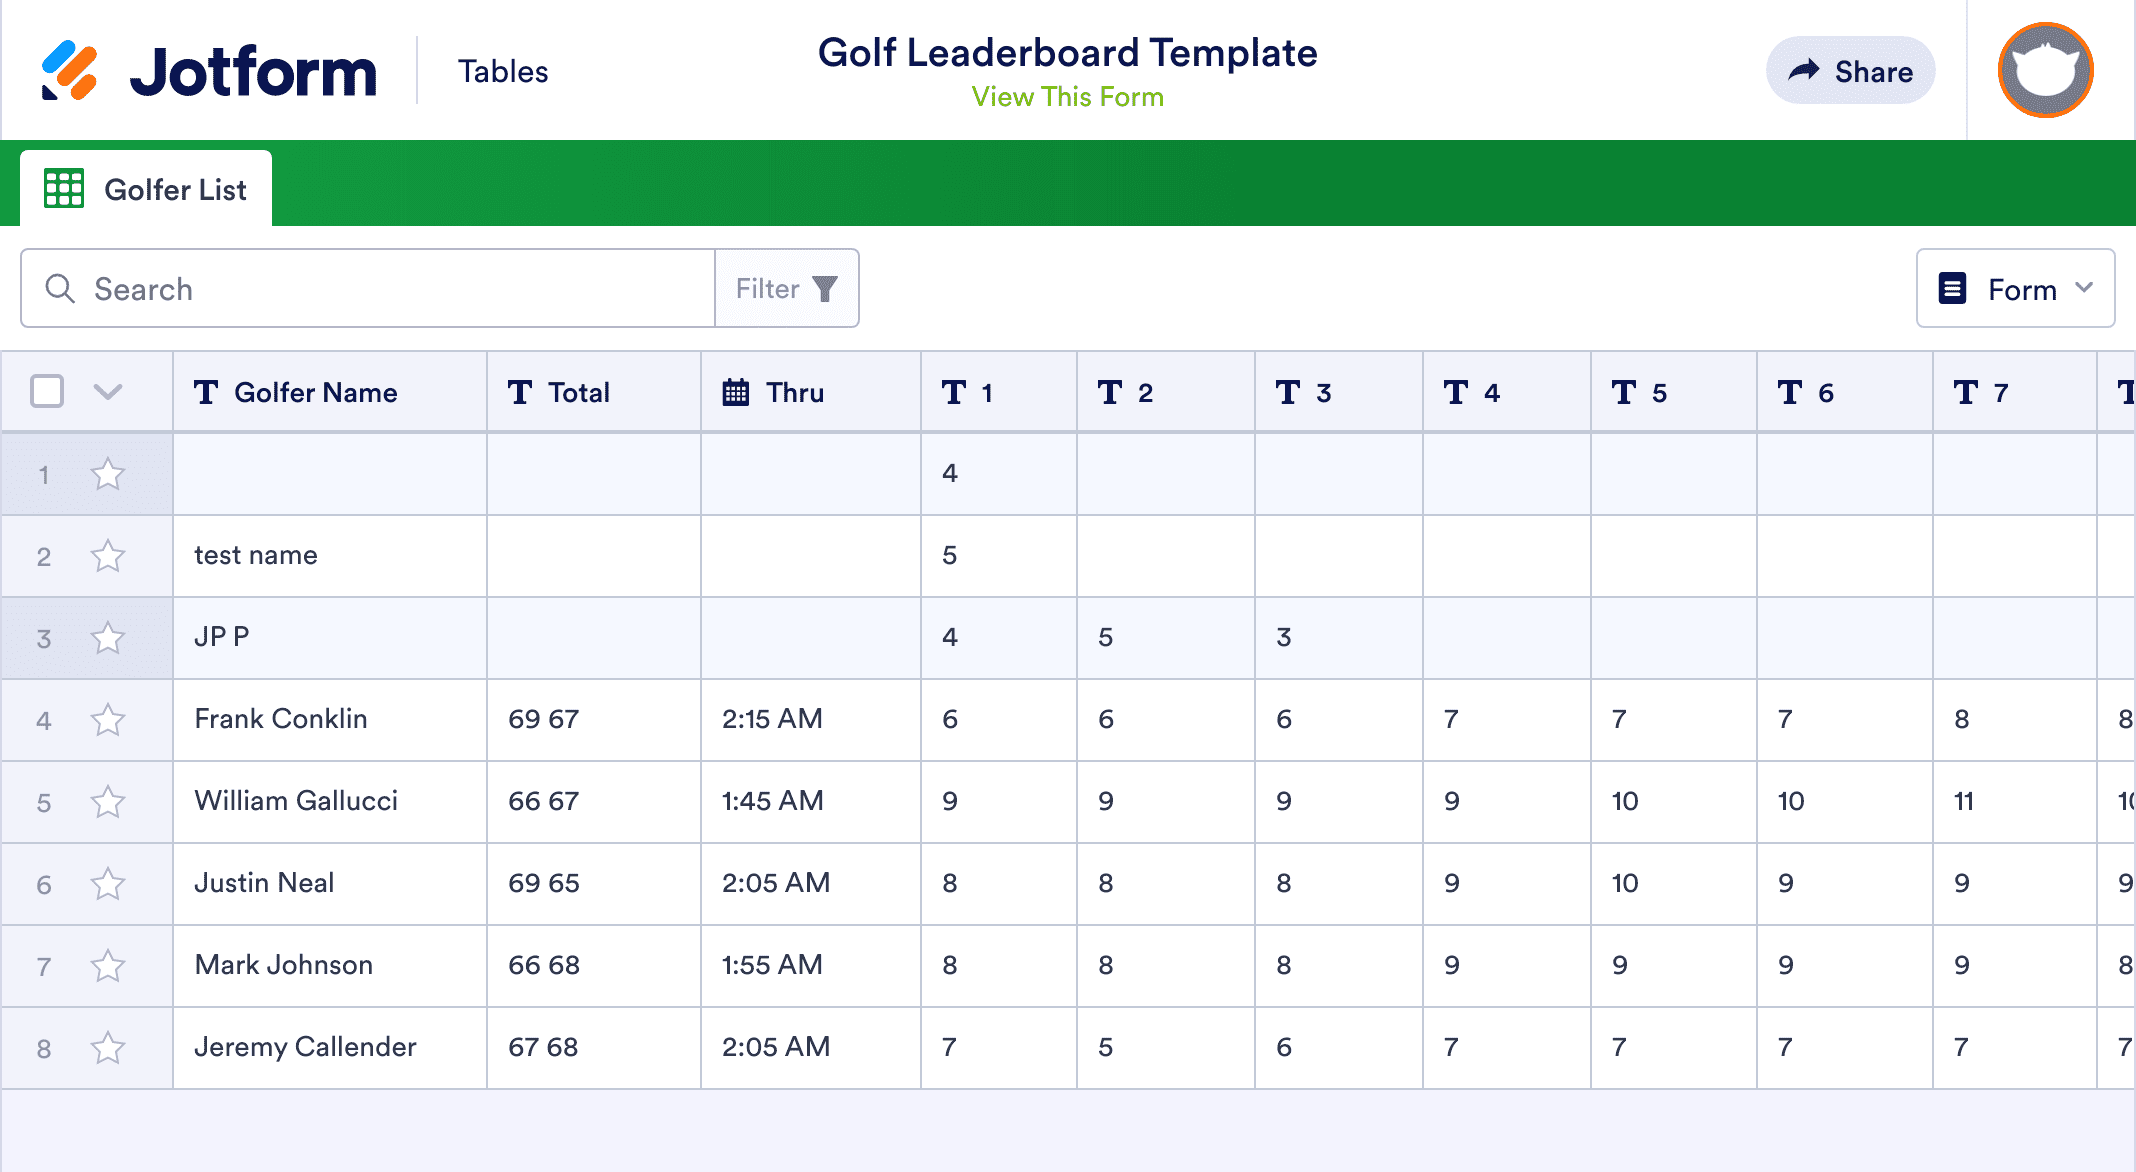 Golf Leaderboard Template